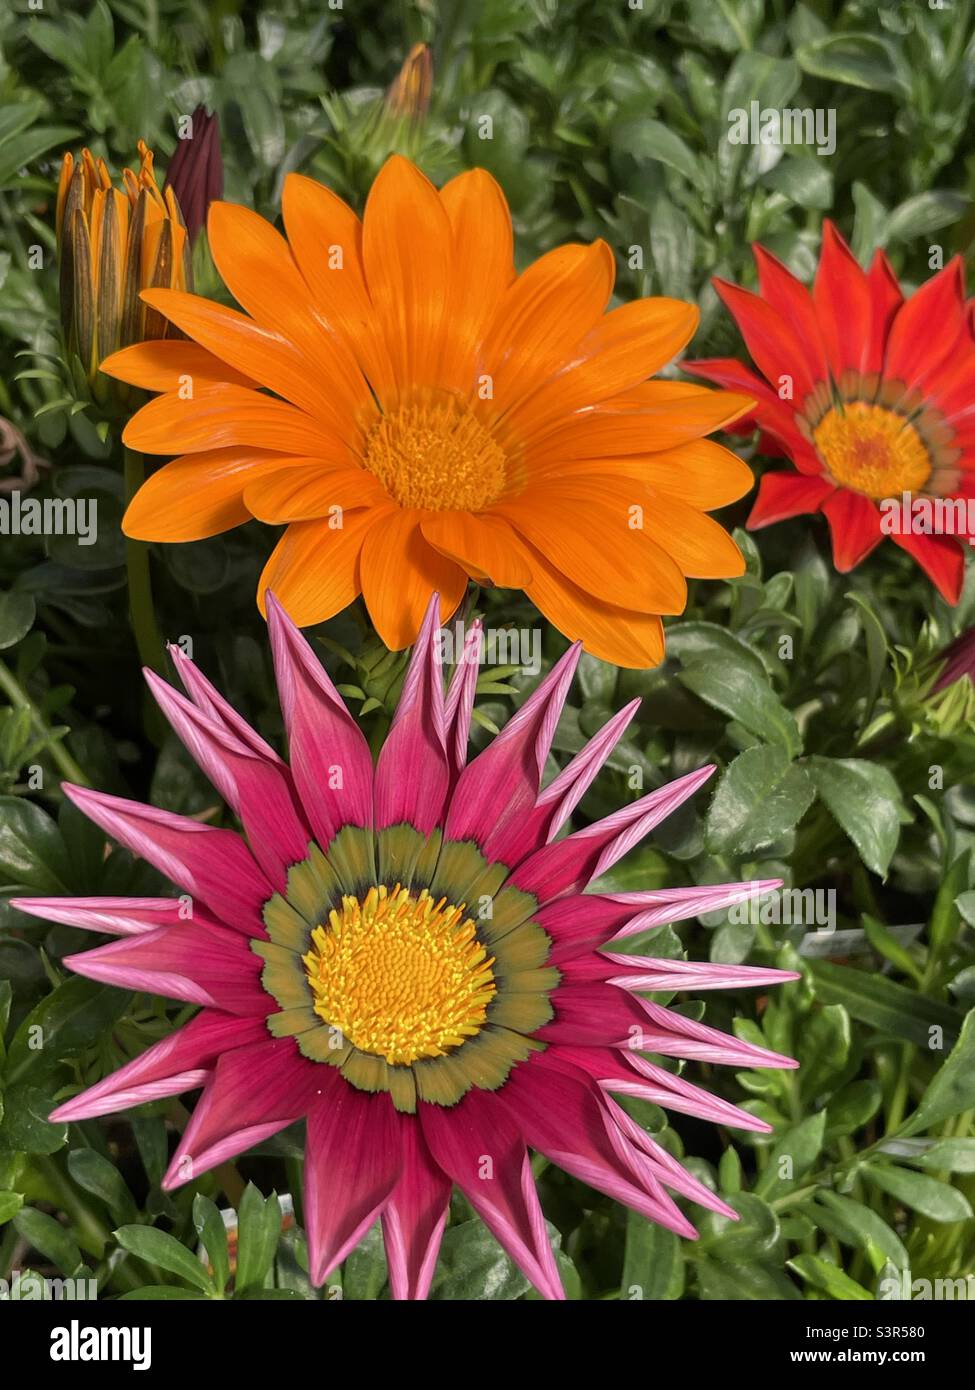 Gazania flowers Stock Photo